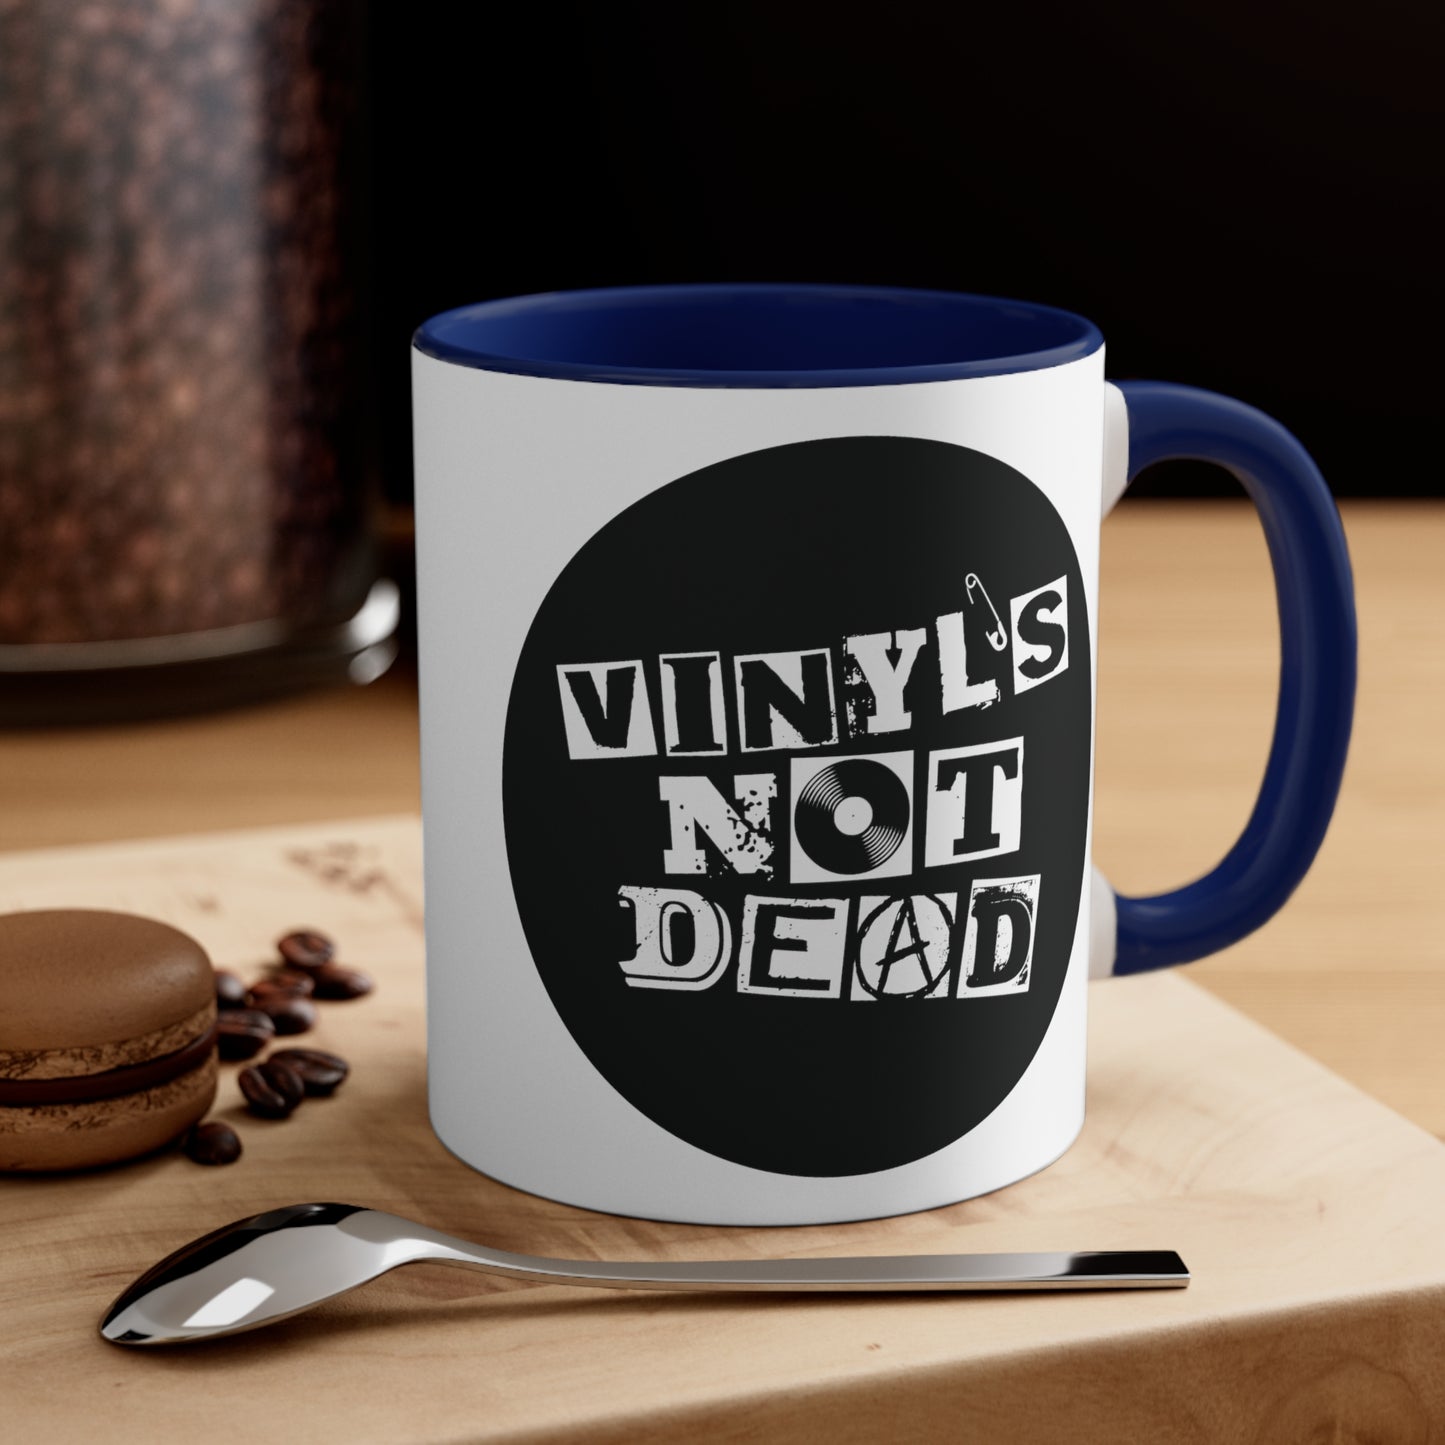 Vinyl Record Themed 11oz Accent Coffee Mug - Vinyl is Not Dead Navy